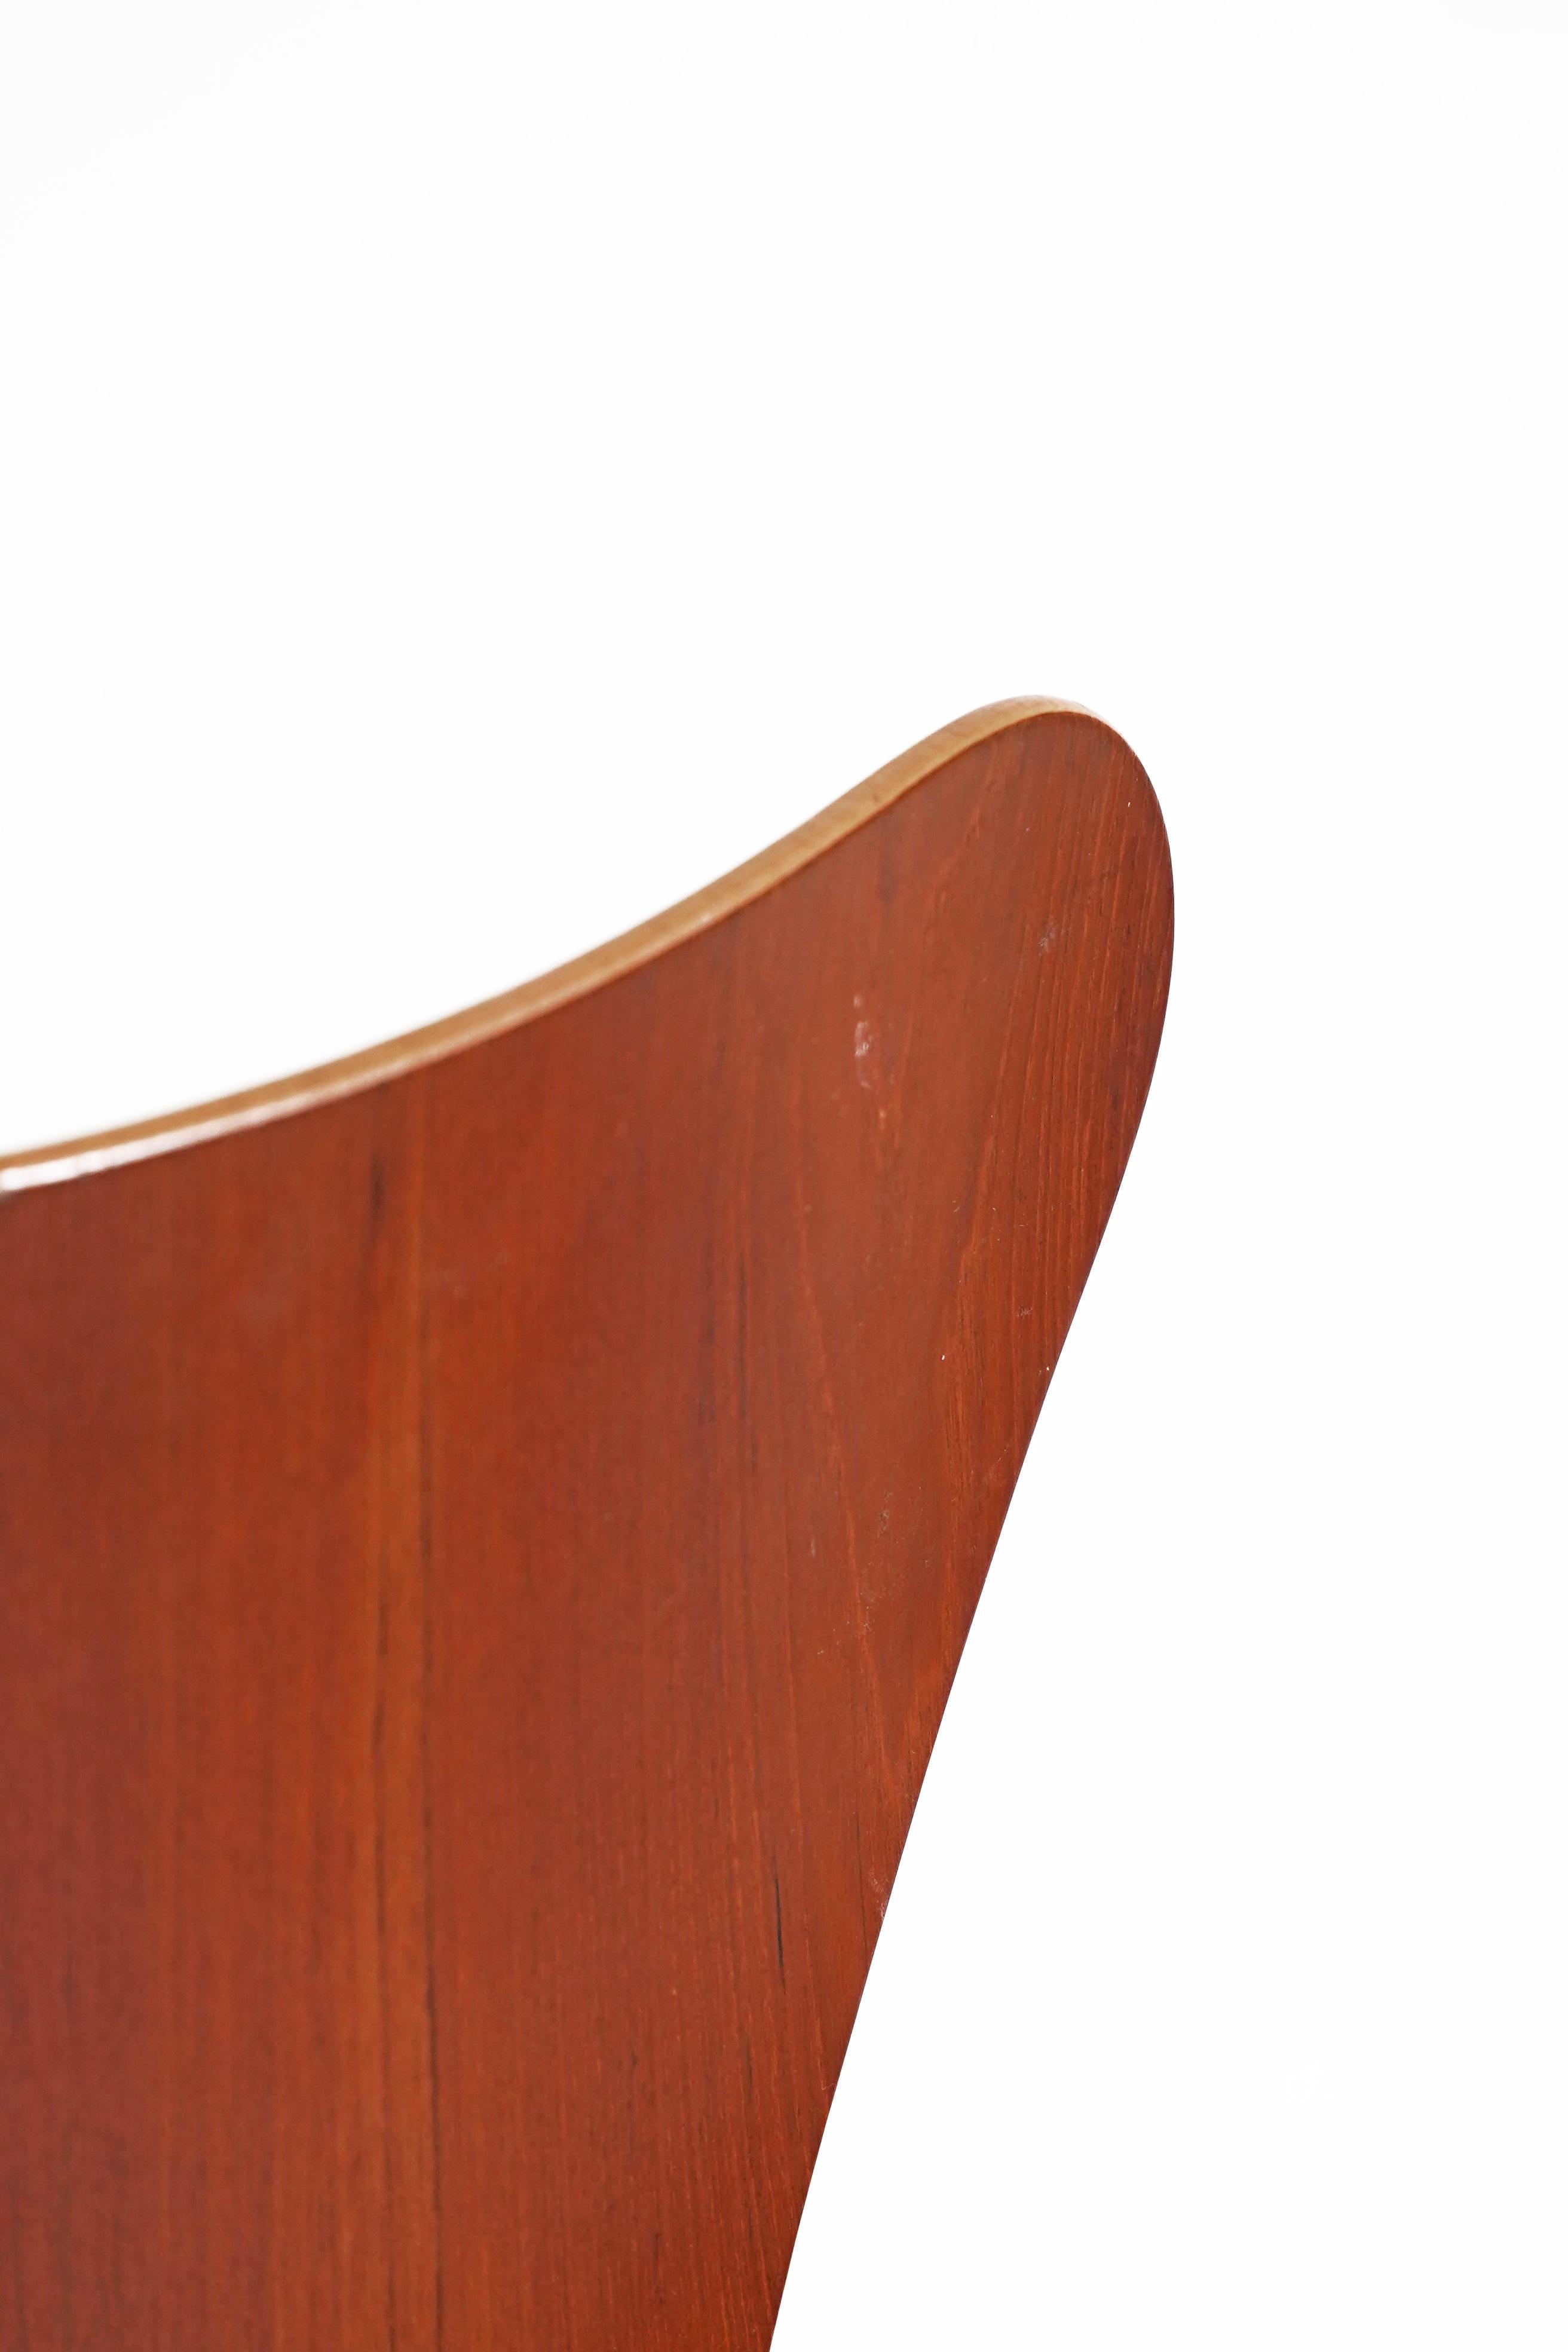 Metal Set of 4 Series 7 Butterfly Chairs in Teak by Arne Jacobsen for Fritz Hansen